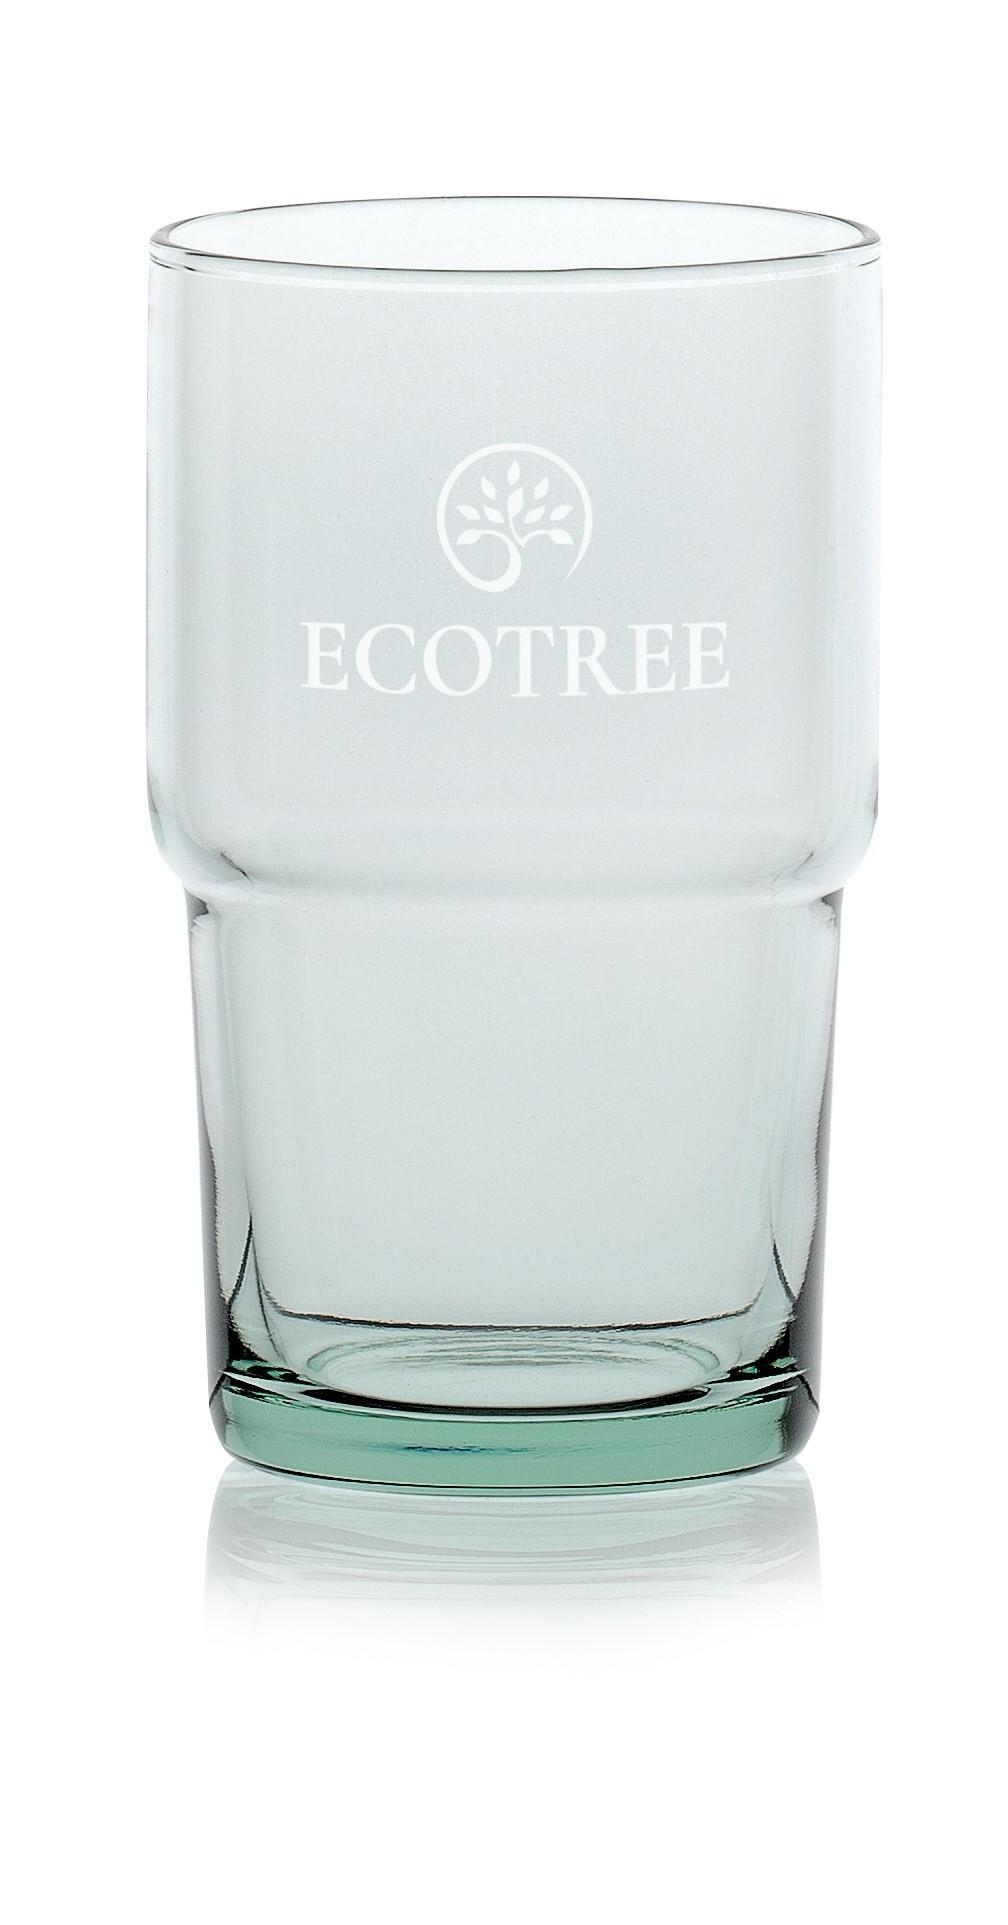 Pahar de băut Nora - verde/transparentă, Konventionell, sticlă (8/13,2cm) - ecoTree